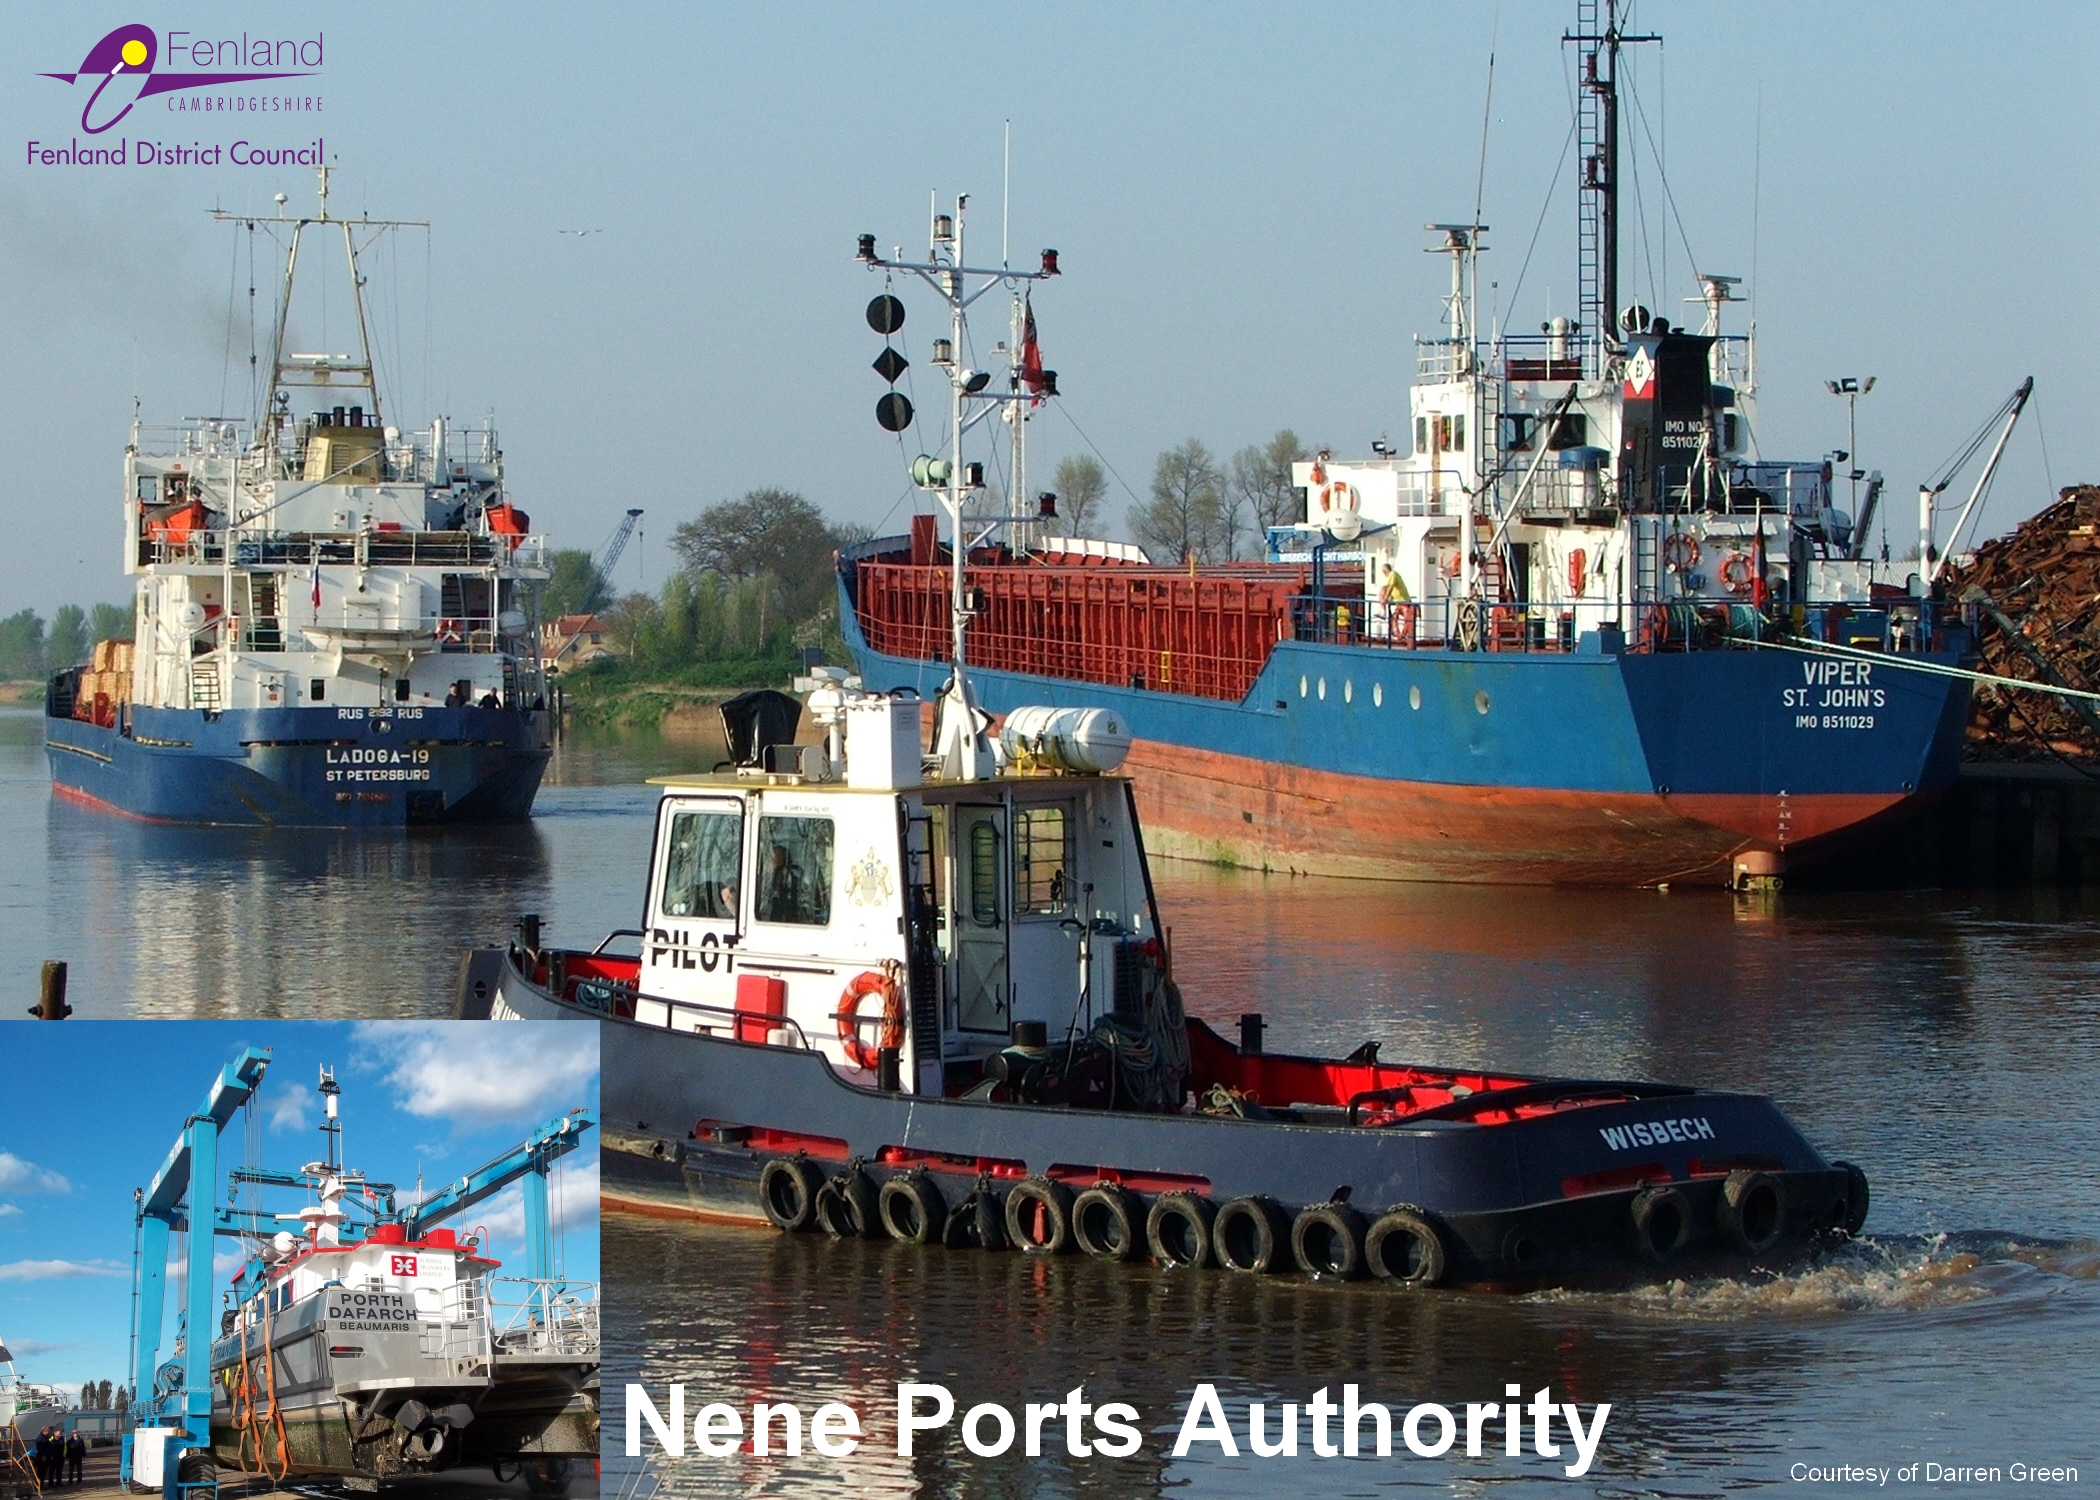 Nene Ports Authority (Fenland DC)